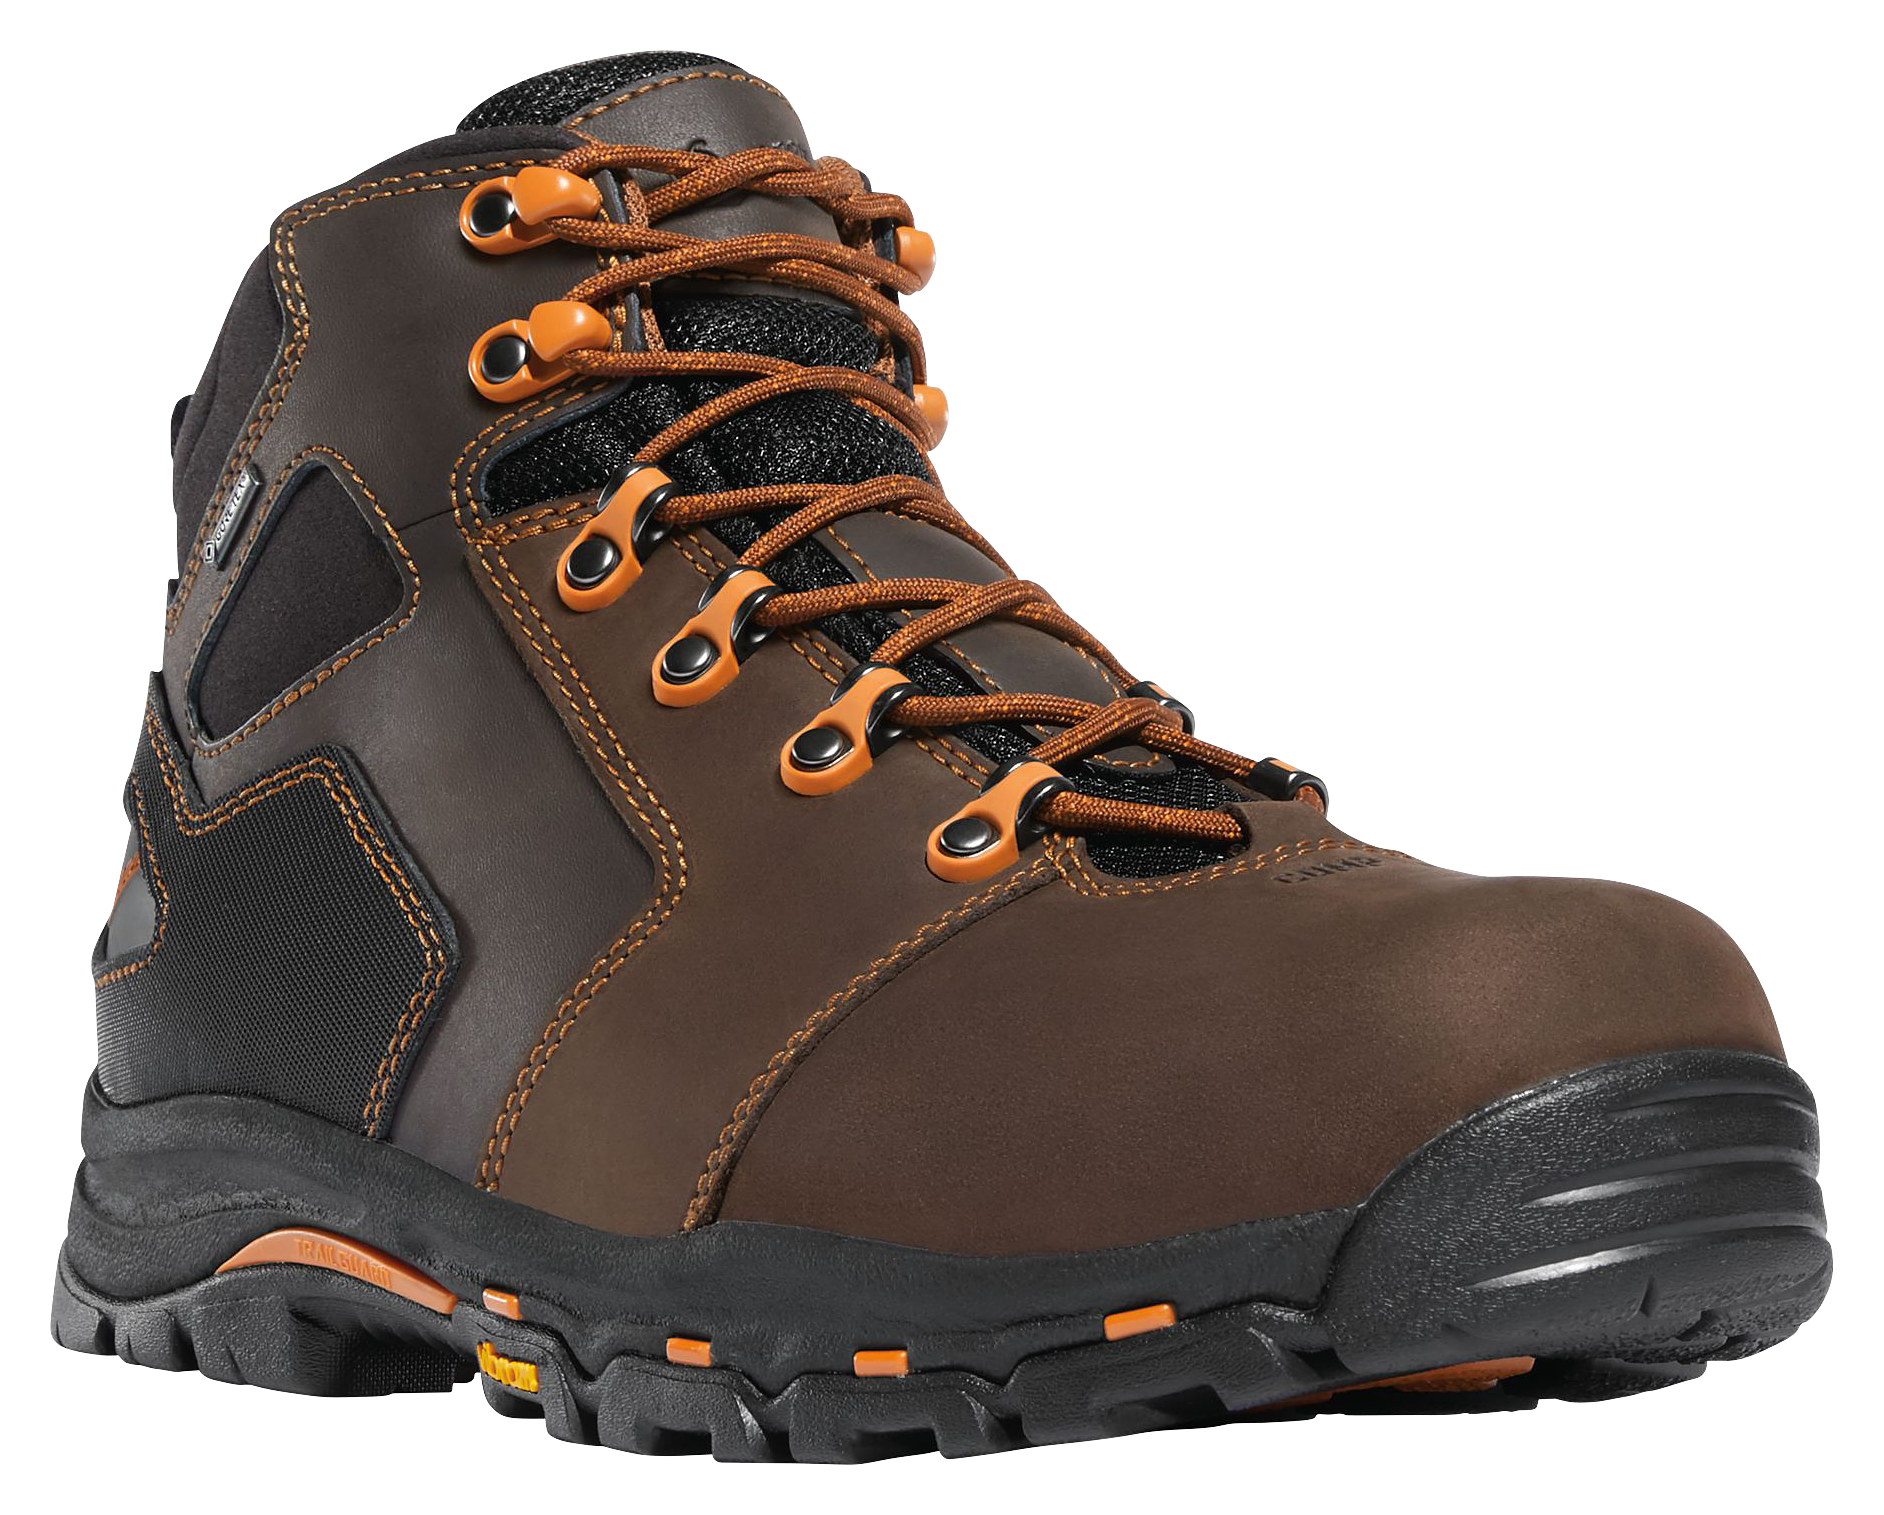 Danner Vicious 4.5'' GORE-TEX EH Work Boots for Men - Brown/Orange - 8W